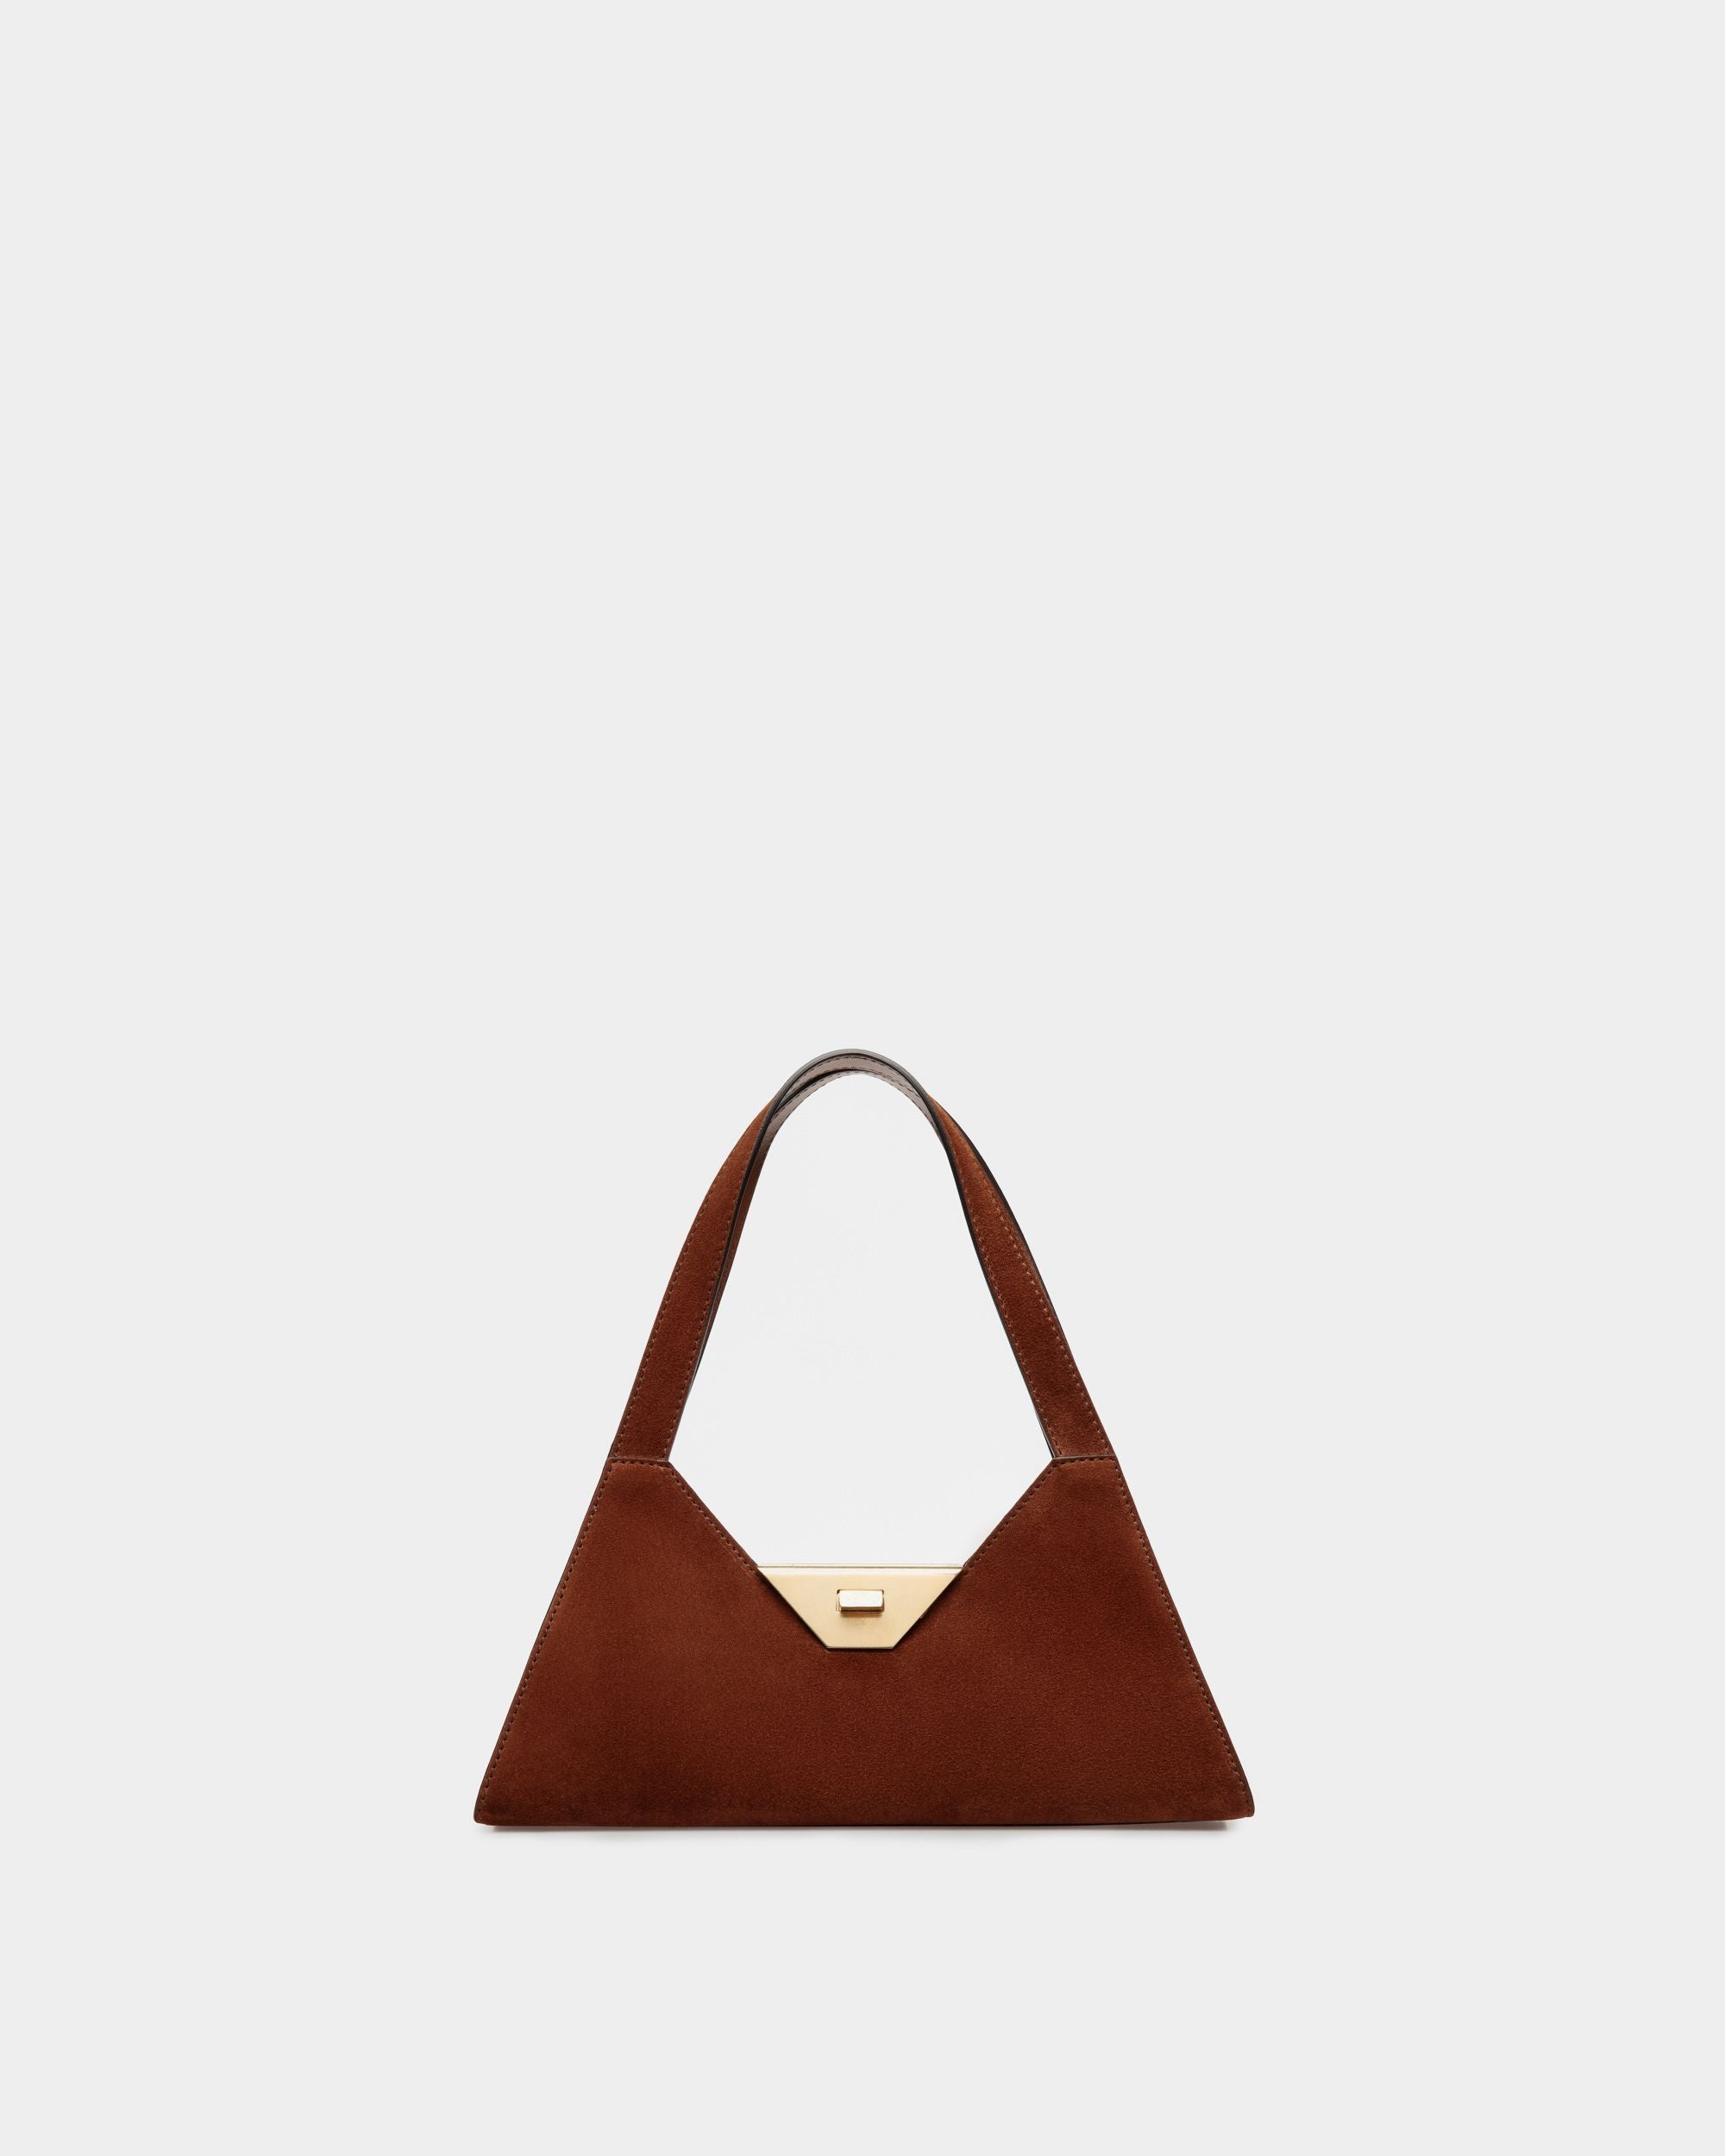 Trilliant Small Shoulder Bag | Women's Shoulder Bag | Brown Suede Leather | Bally | Still Life Front